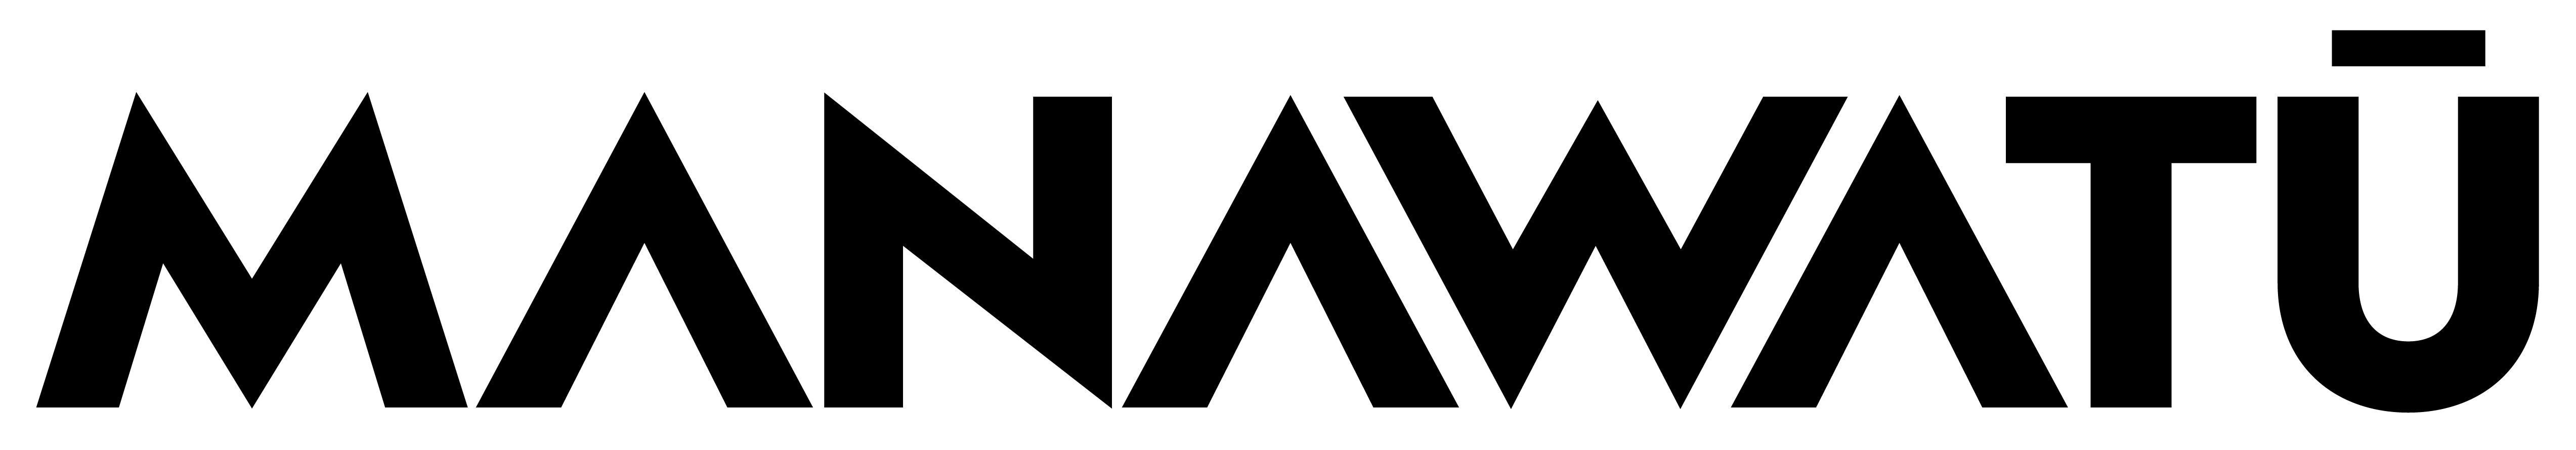 manawatu logo black